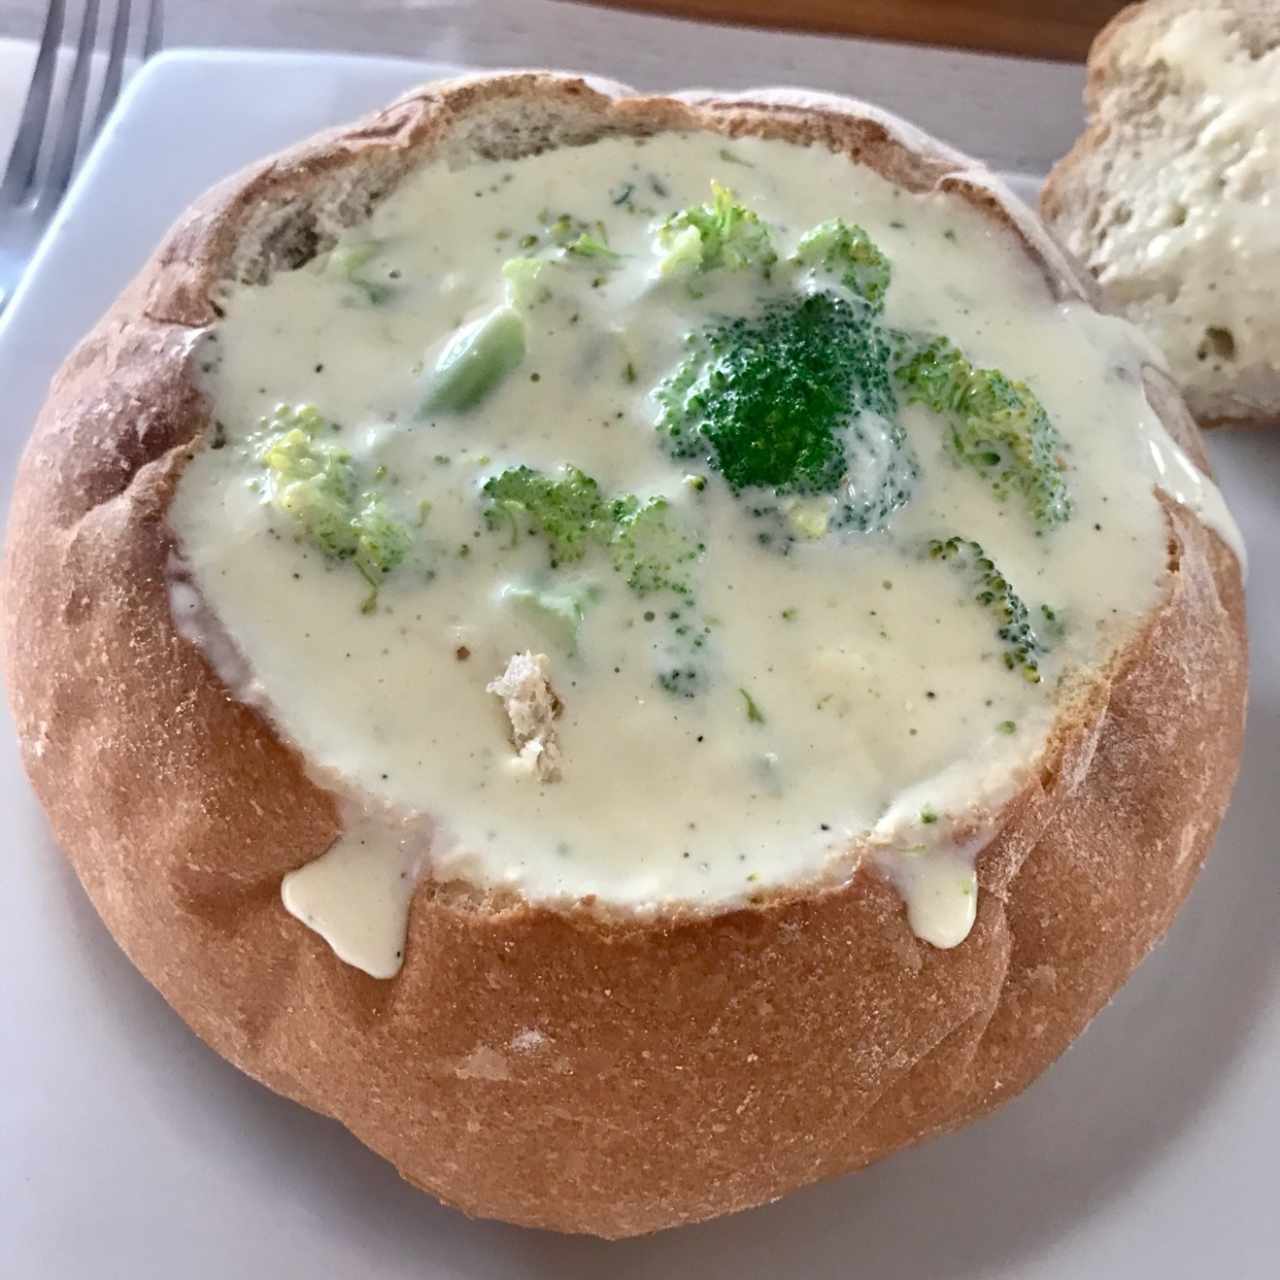 Pannecook de brócoli con queso